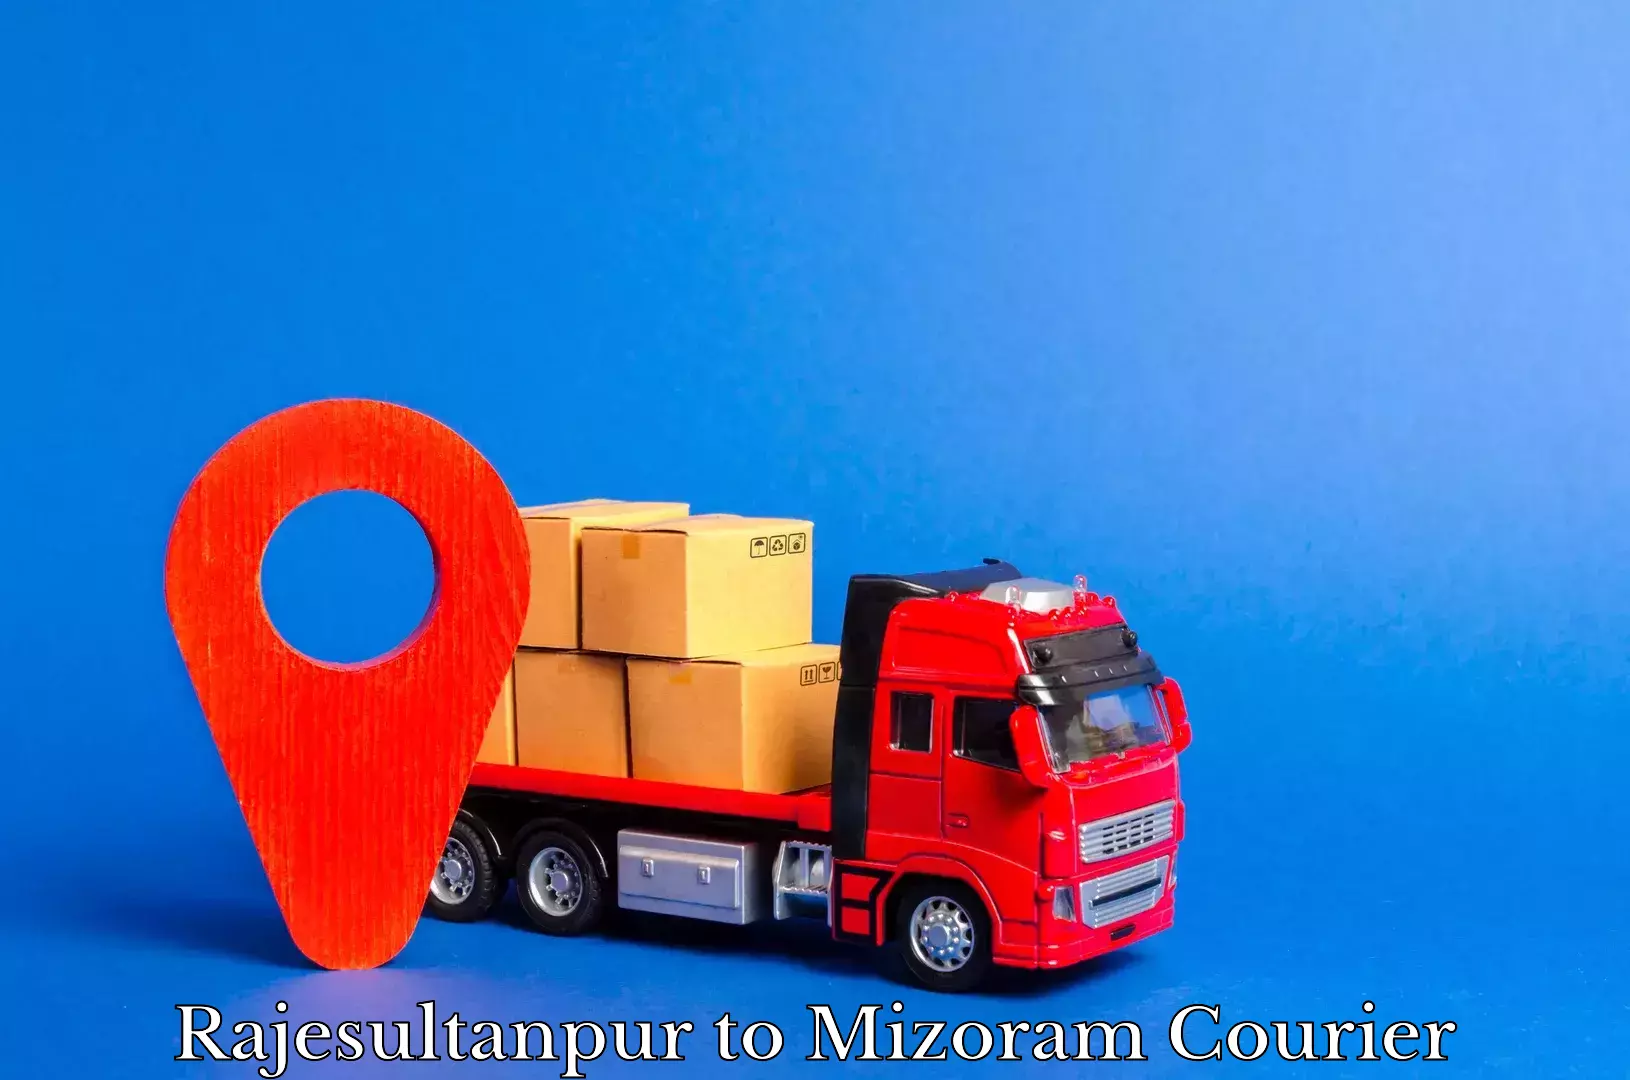 Modern courier technology Rajesultanpur to Mizoram